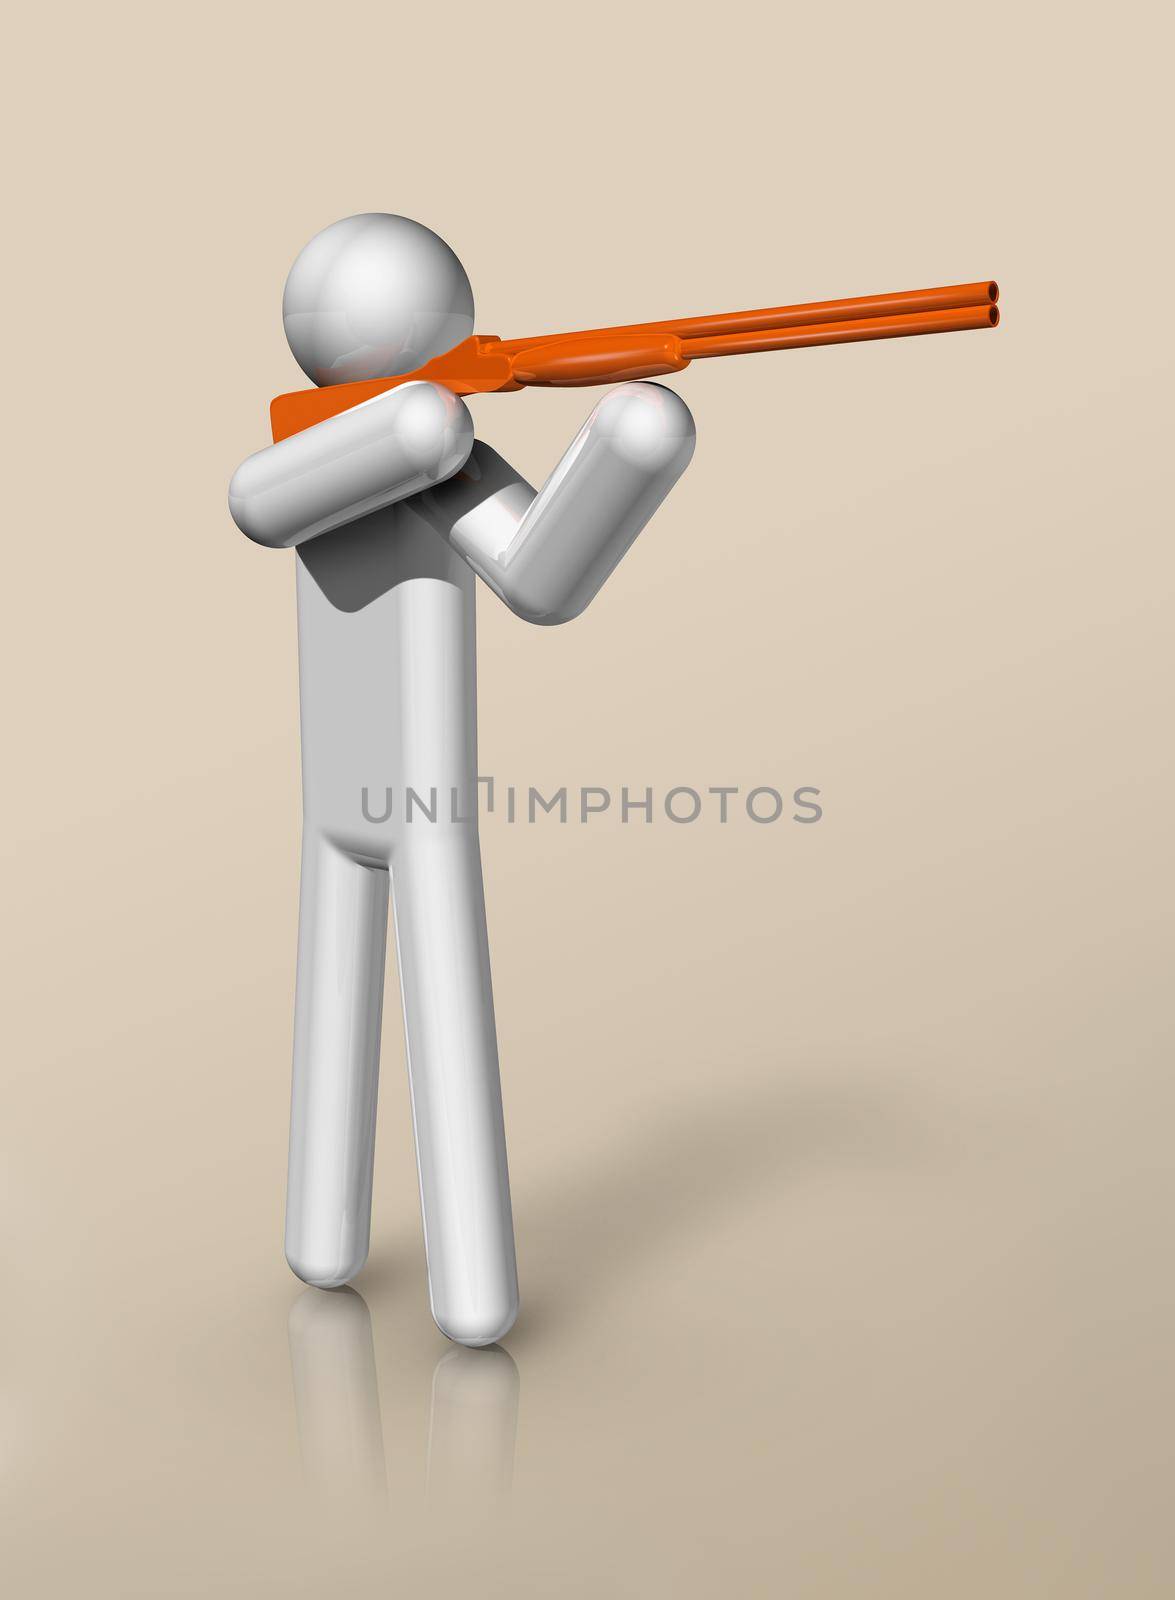 three dimensional shooting symbol, olympic sports. Illustration